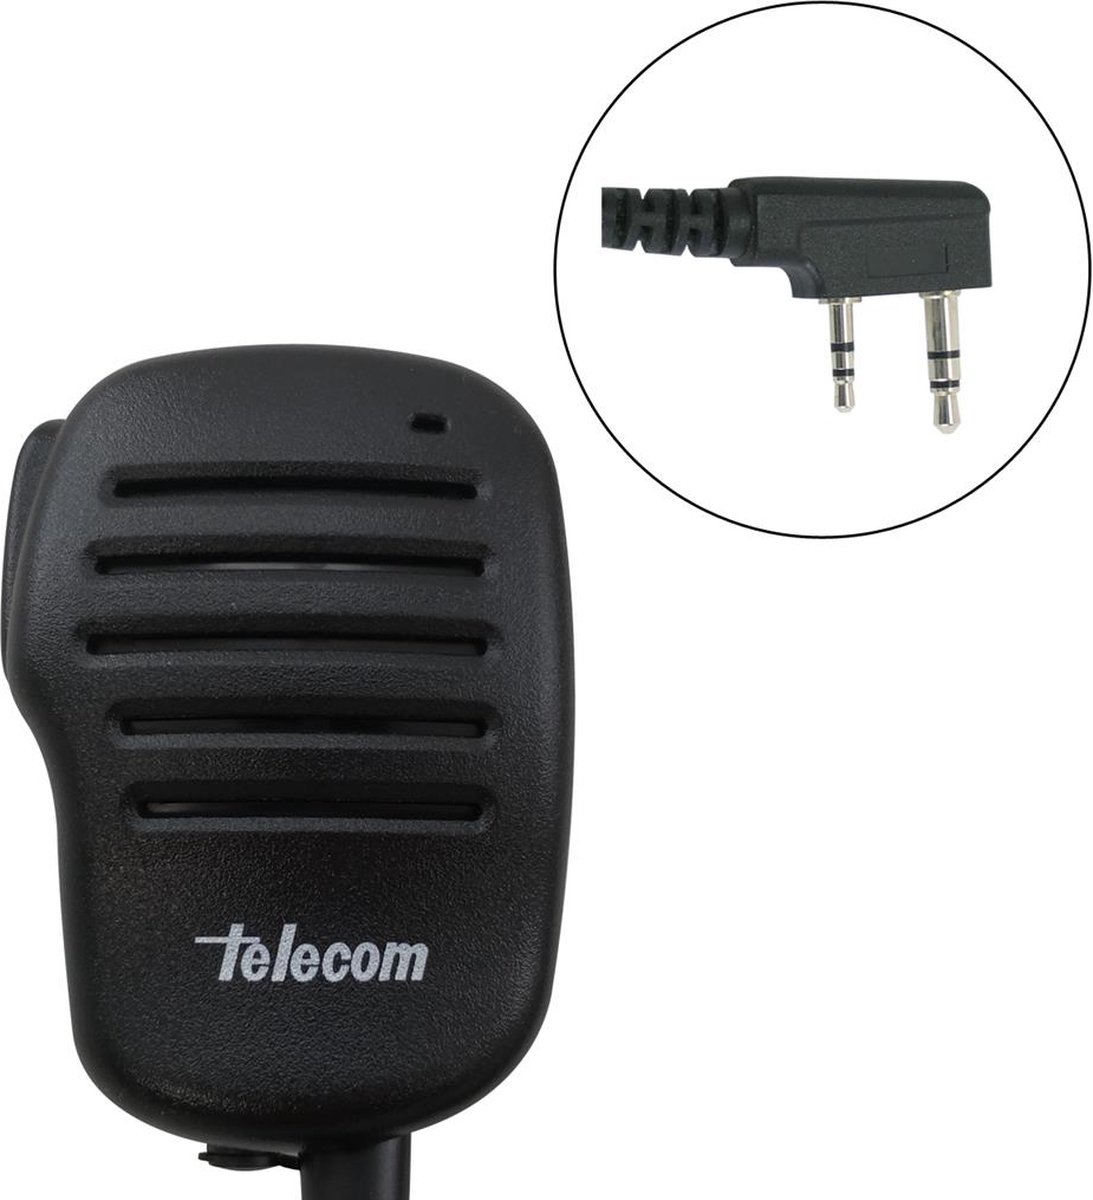 Telecom JD-5002 handmicrofoon - Kenwood